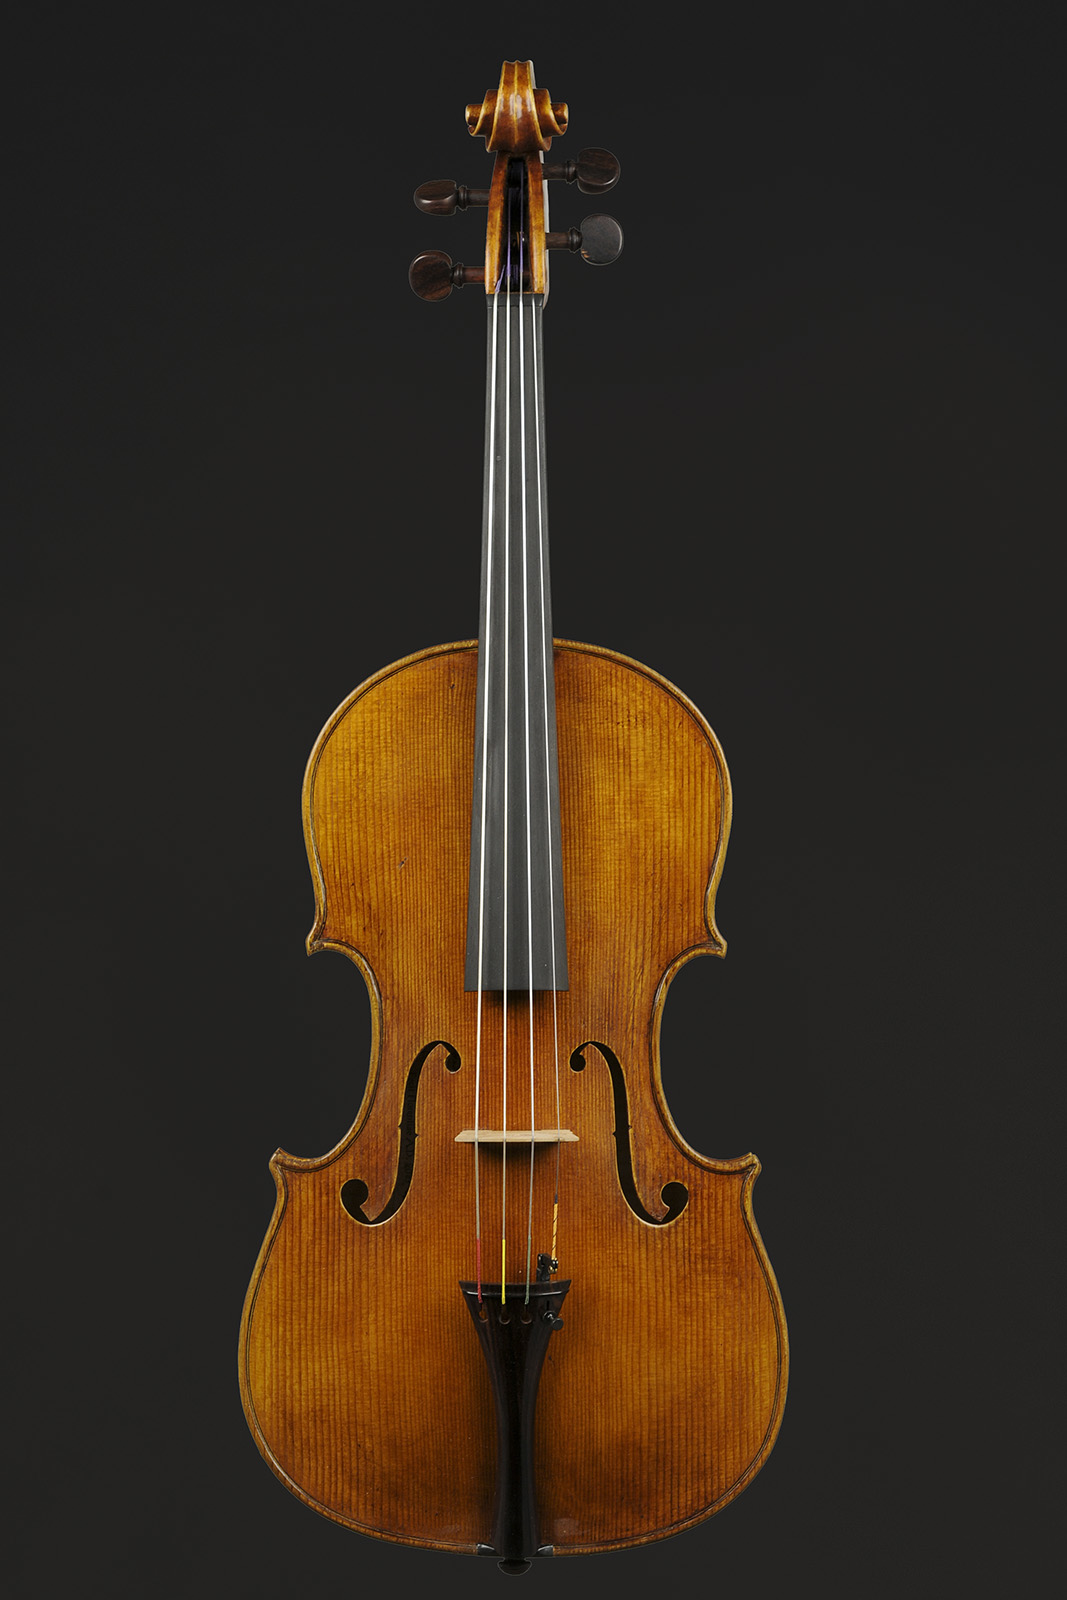 Antonio Stradivari Cremona 1672 “Tigre“ cm 42 - Image 1